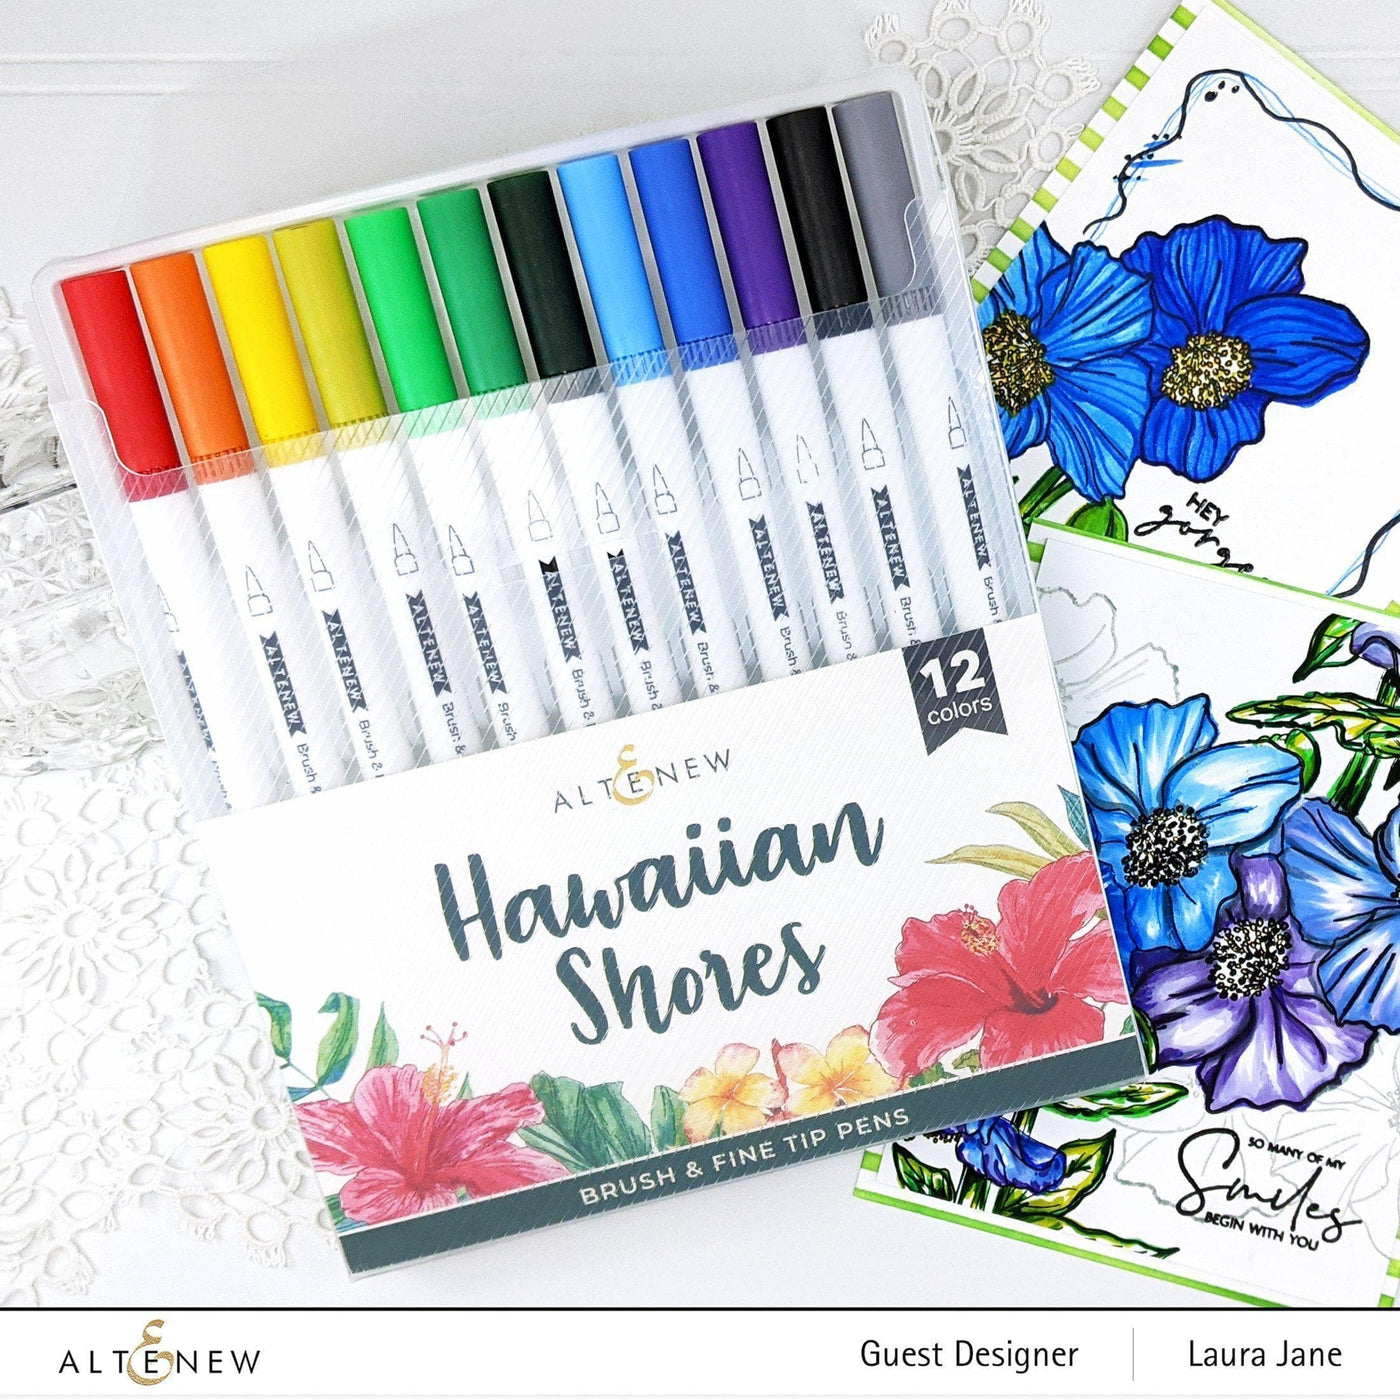 Coloring Tools: Altenew-Tahitian Terrace Dual Tip Pens (Water-based) –  Purple Pinky Promises